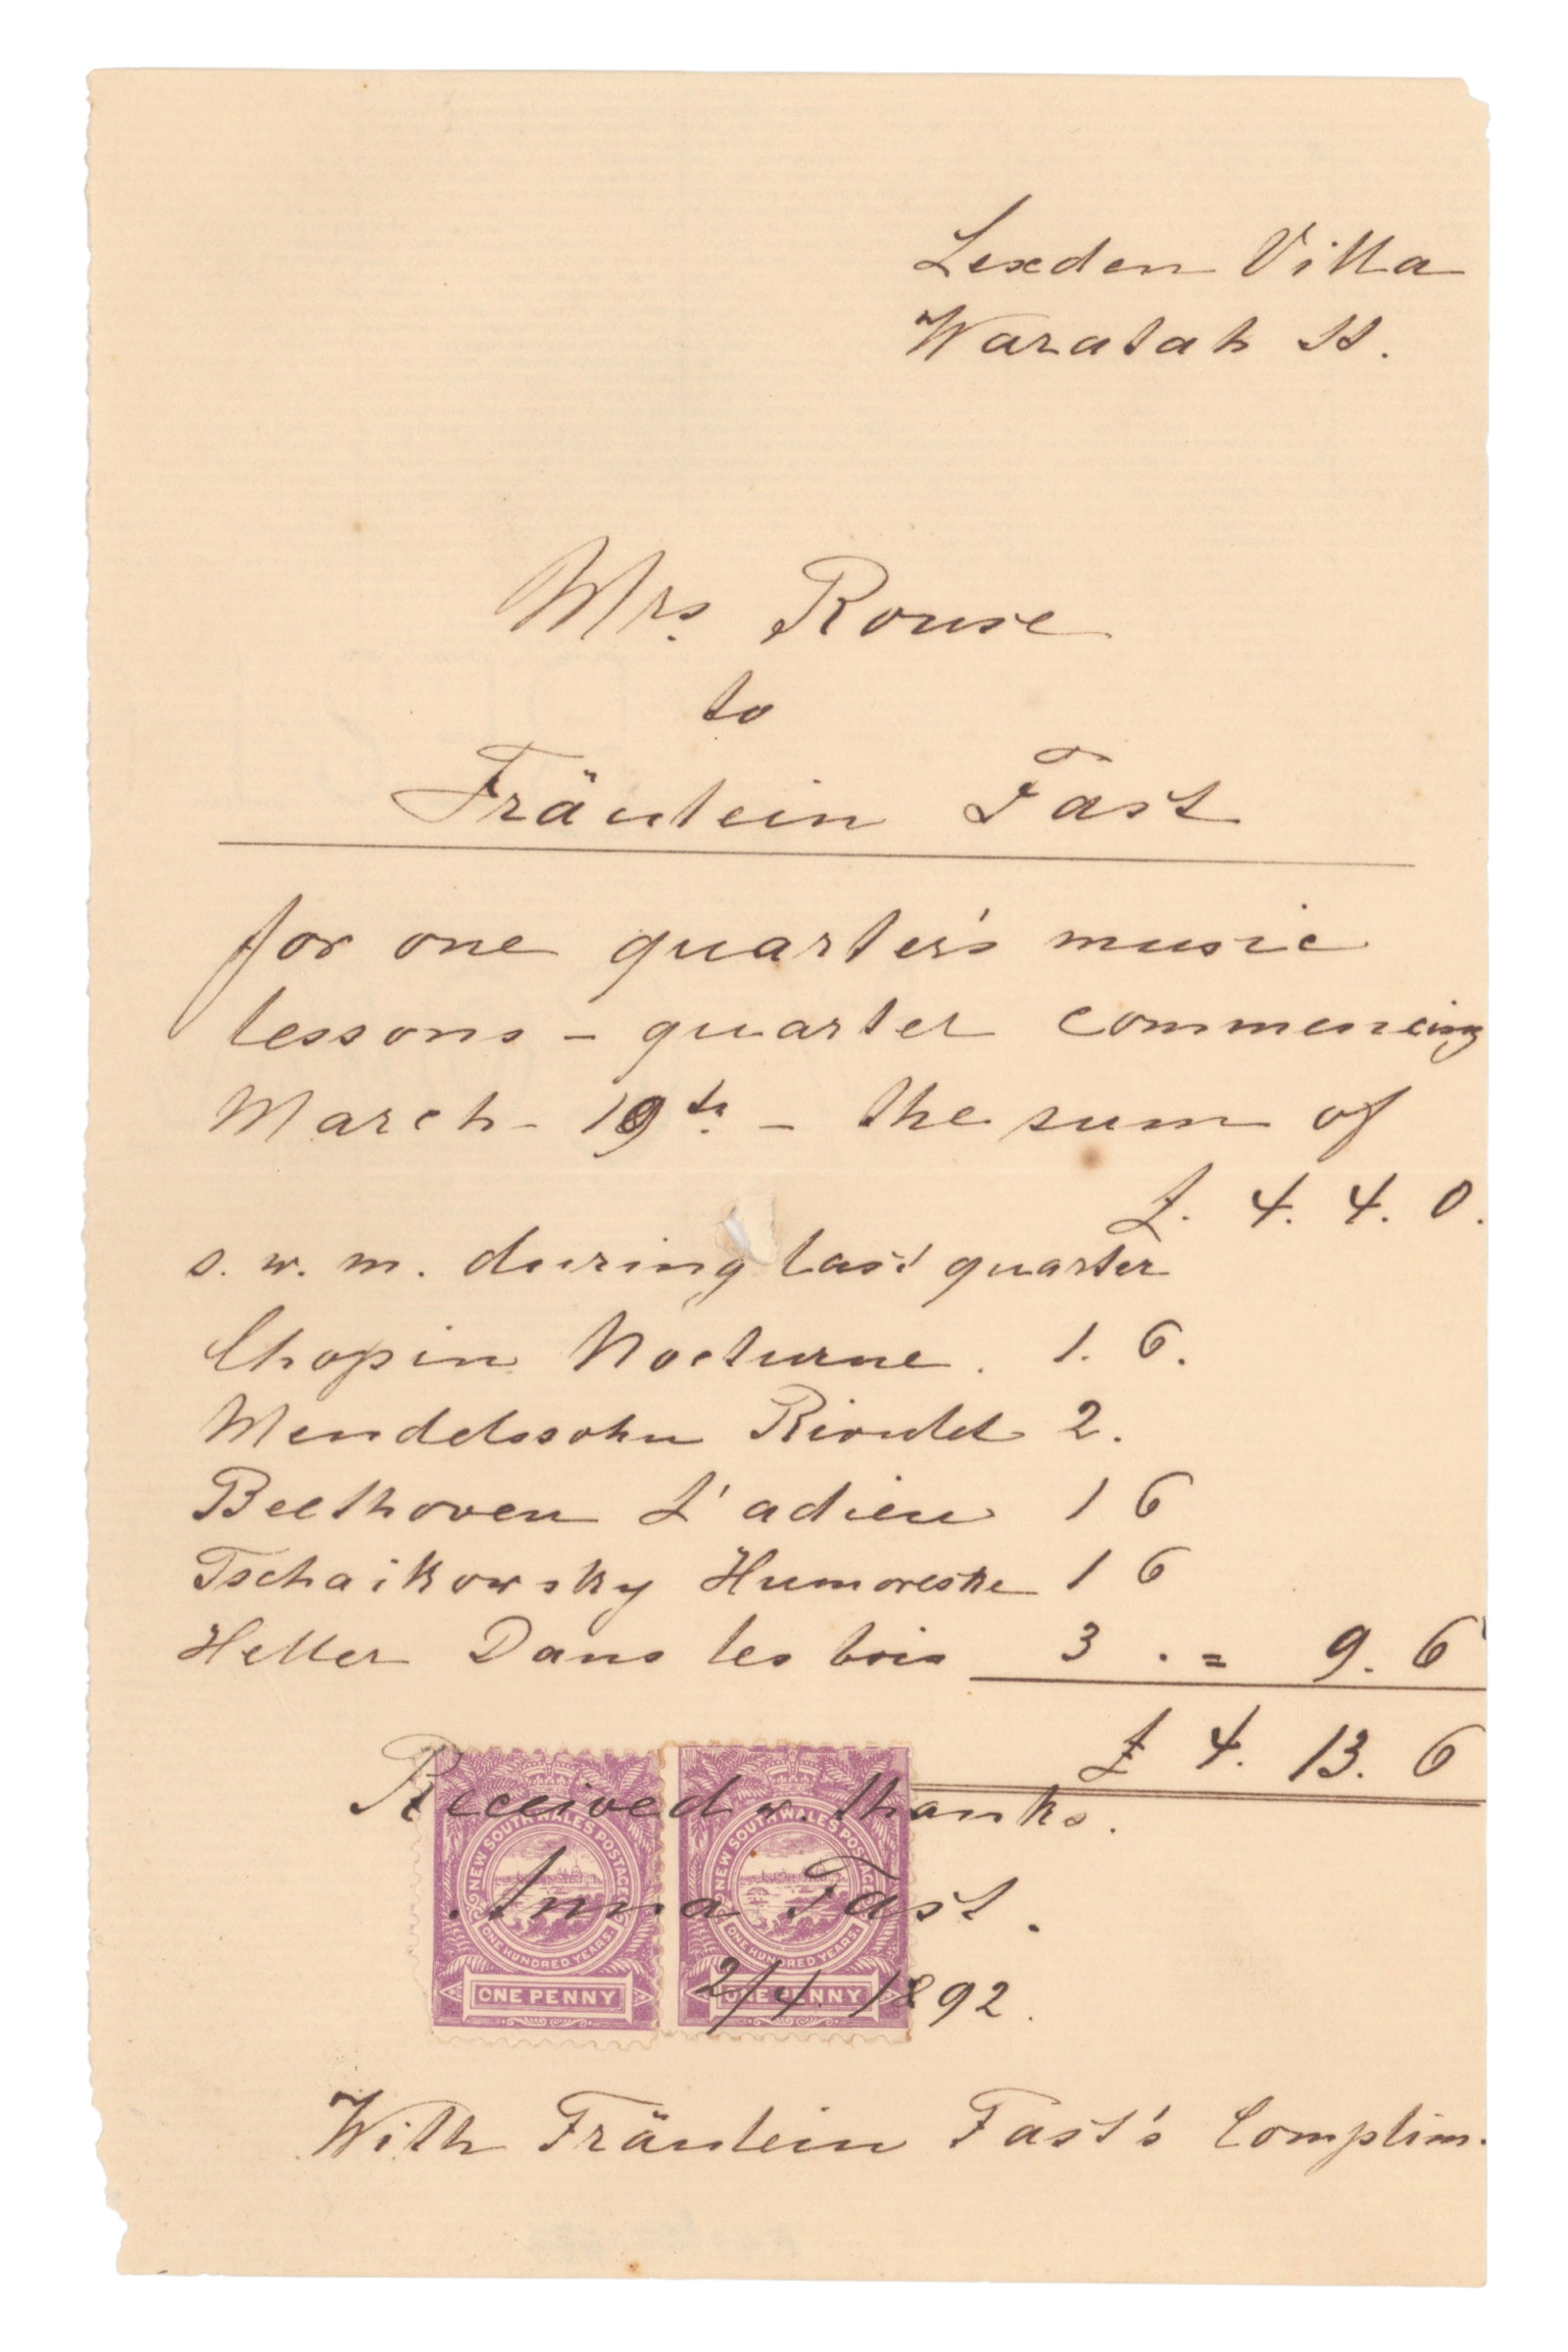 Handwritten receipt with red stamp imprint at bottom.